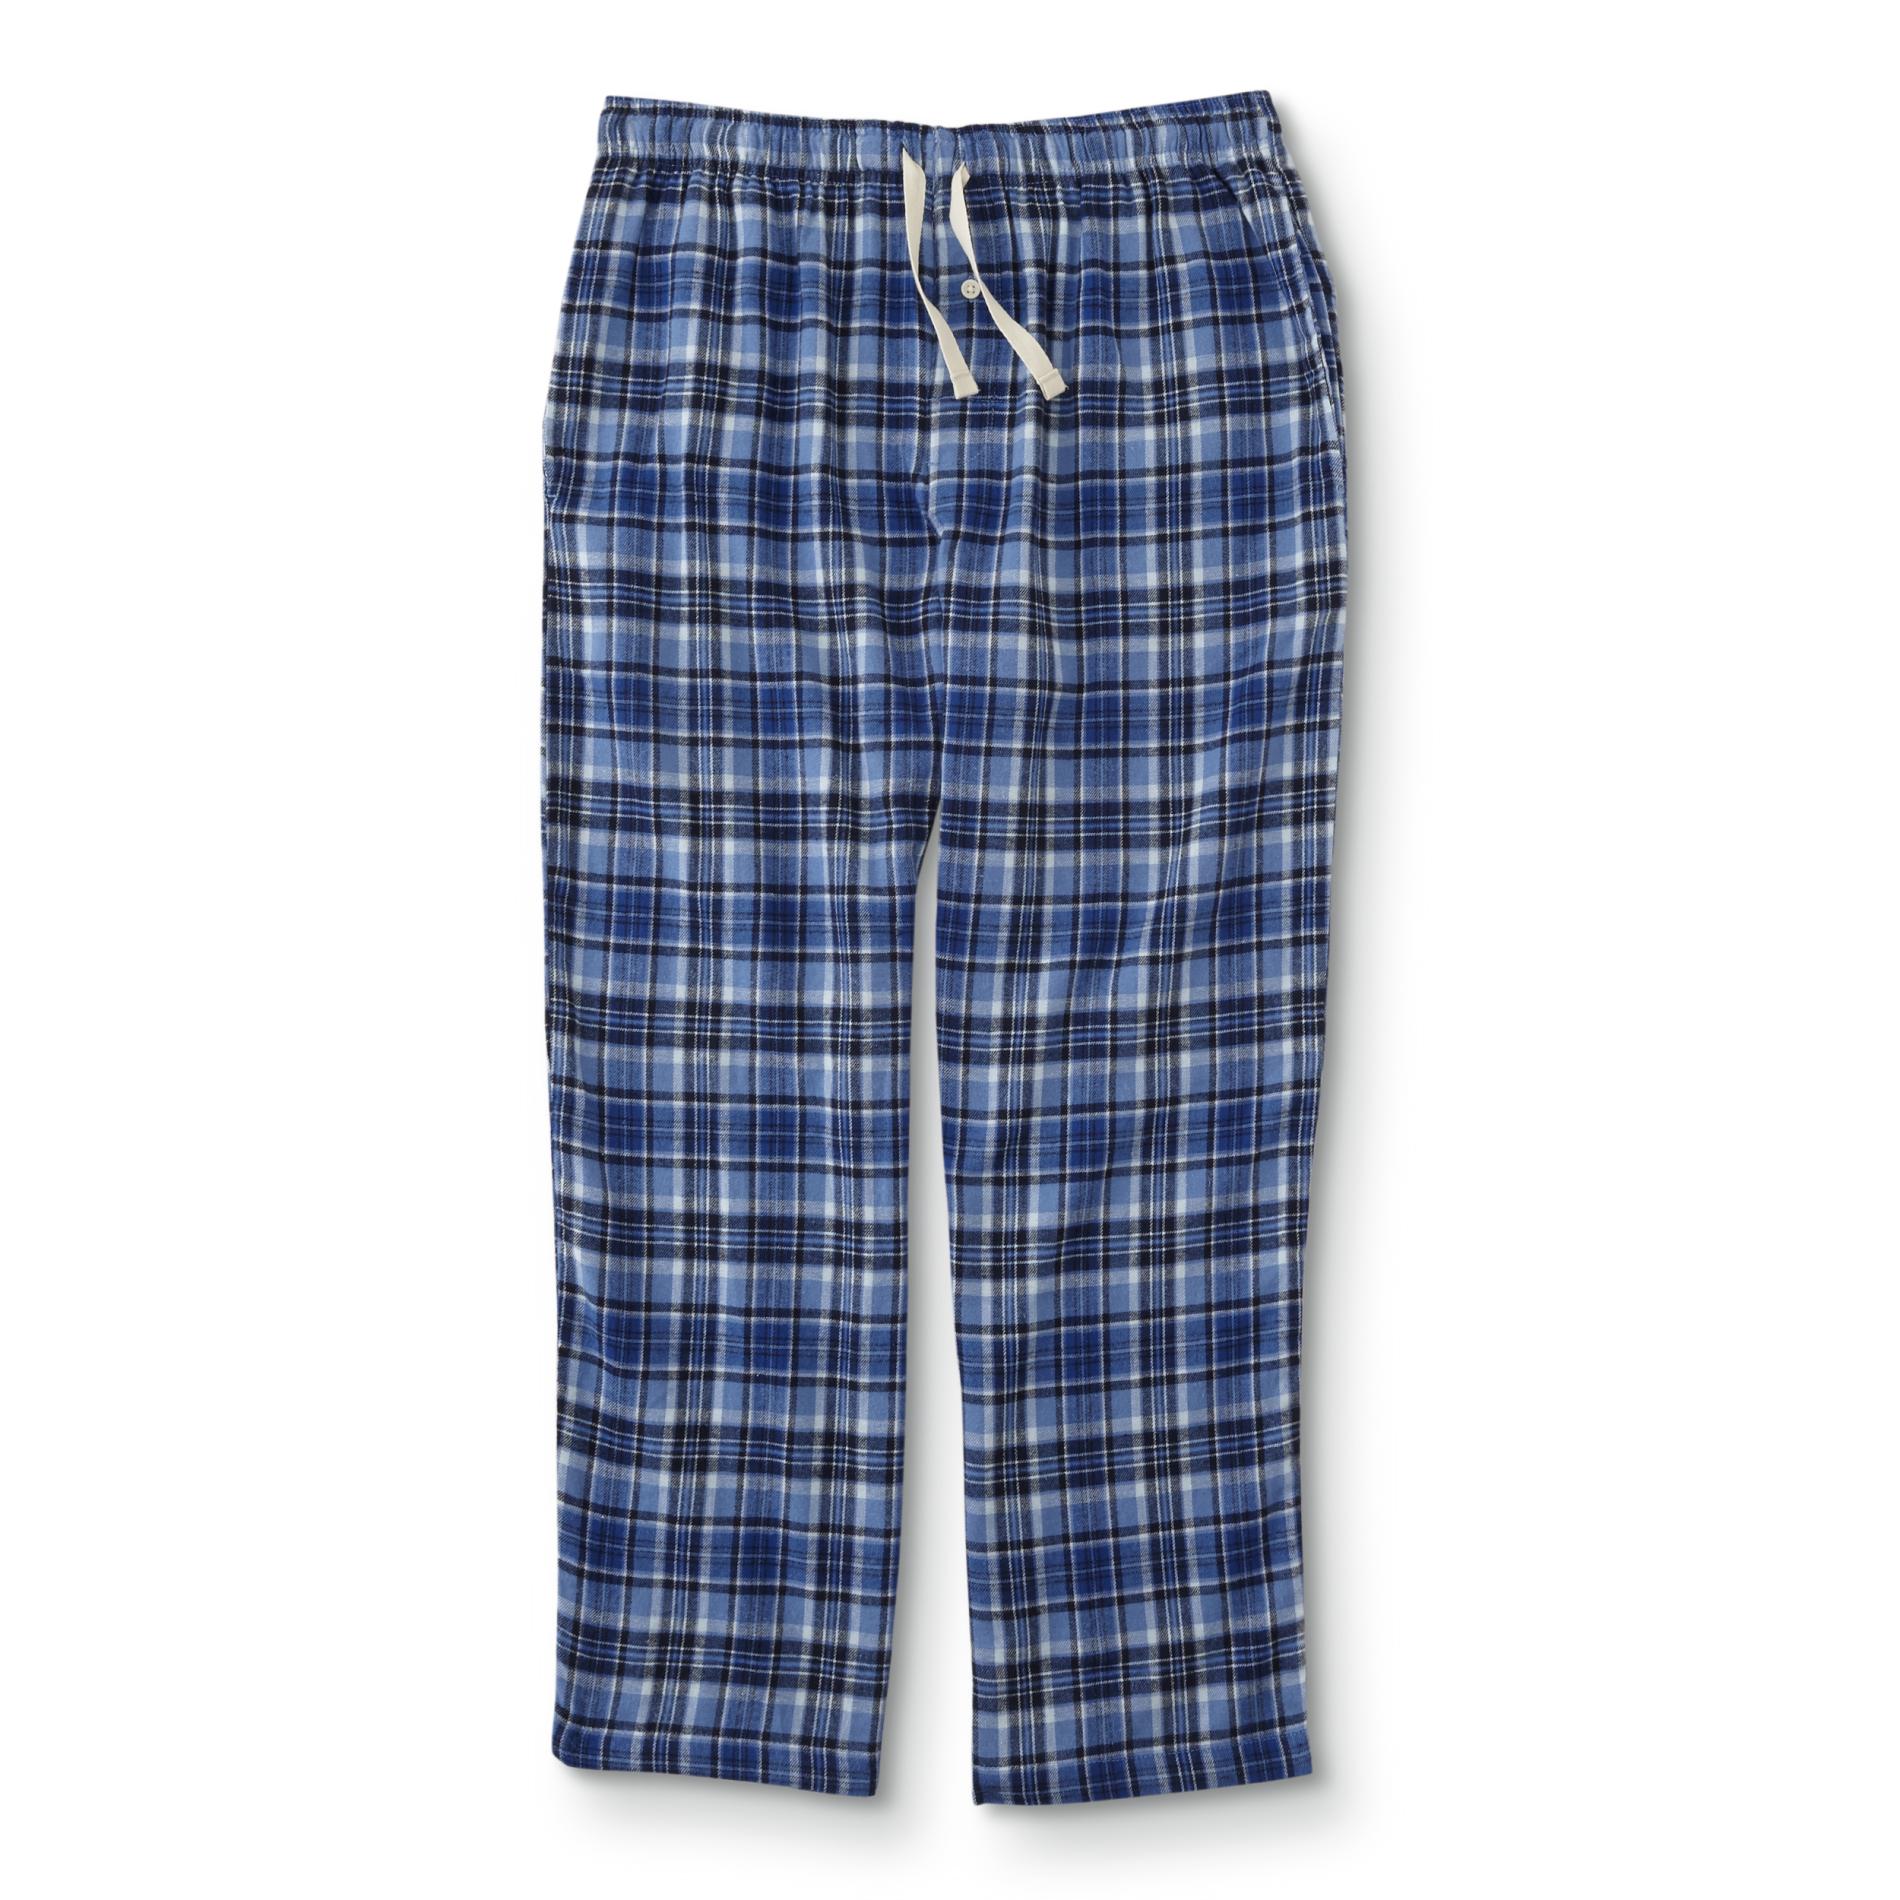 Northwest Territory Men's Flannel Pajama Pants - Plaid